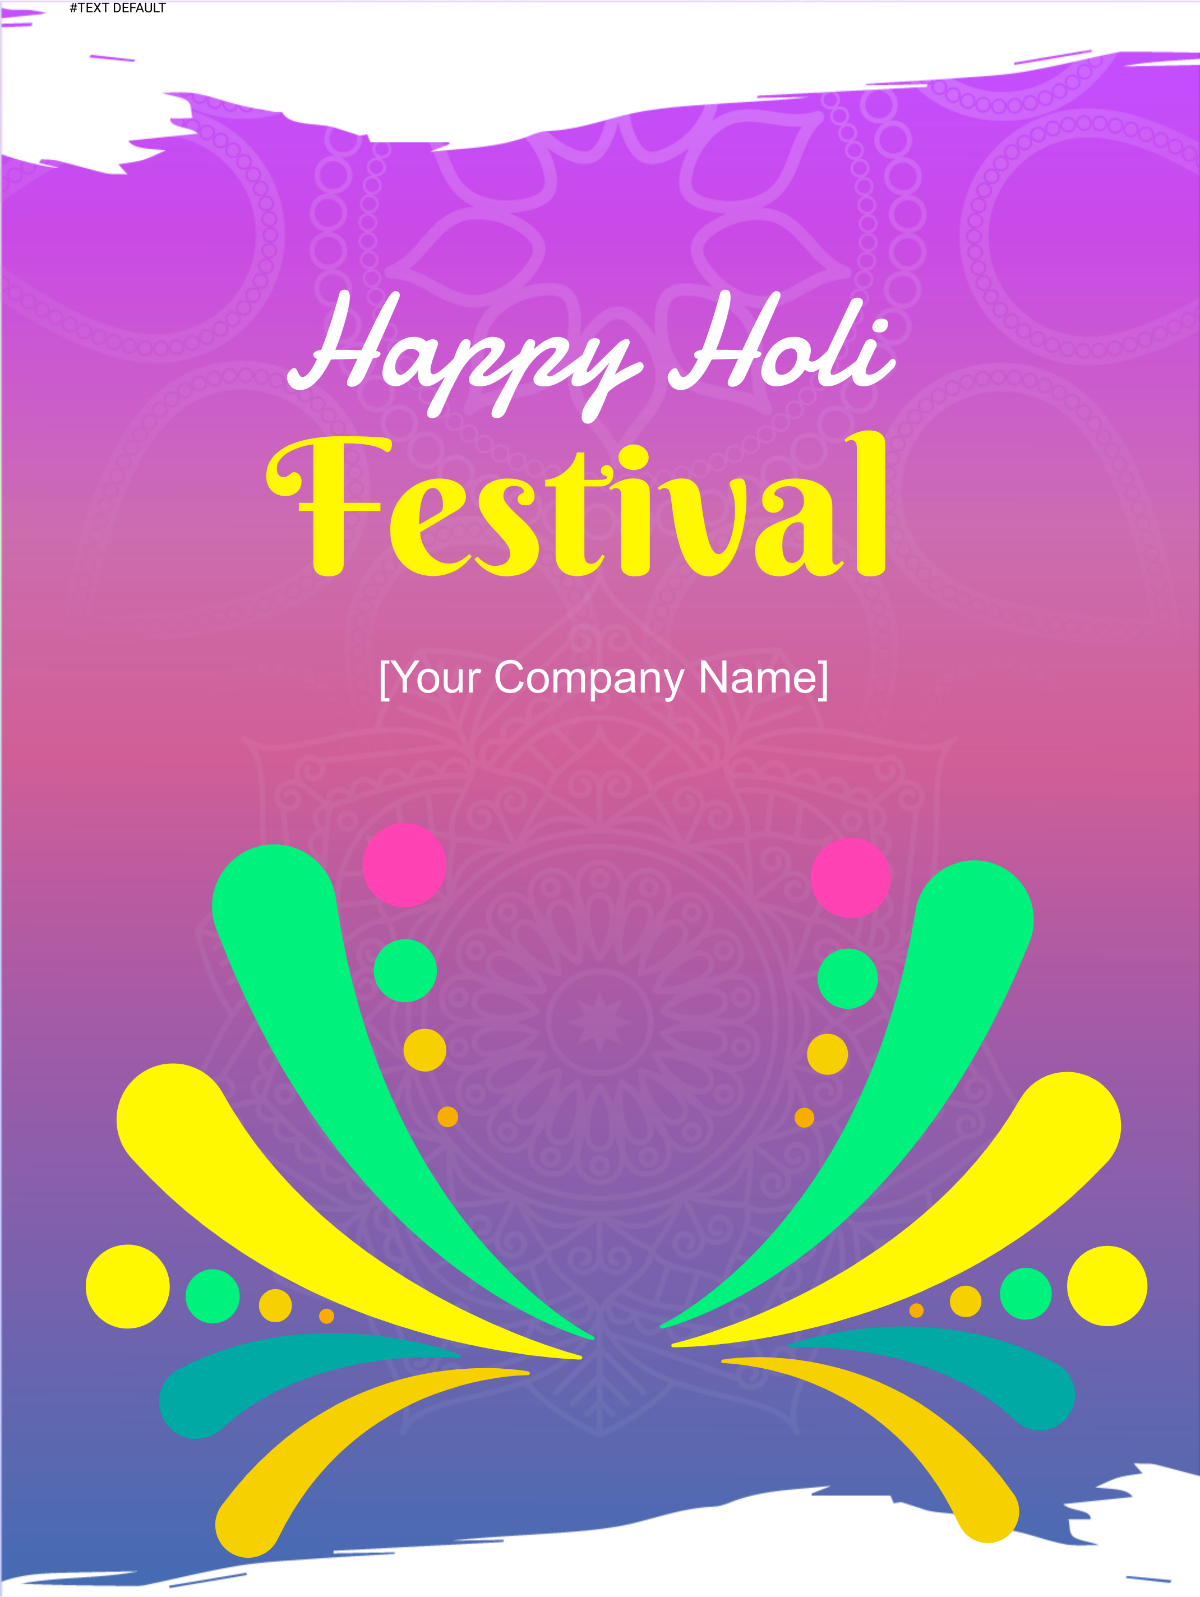 Happy Holi Festival Threads Post